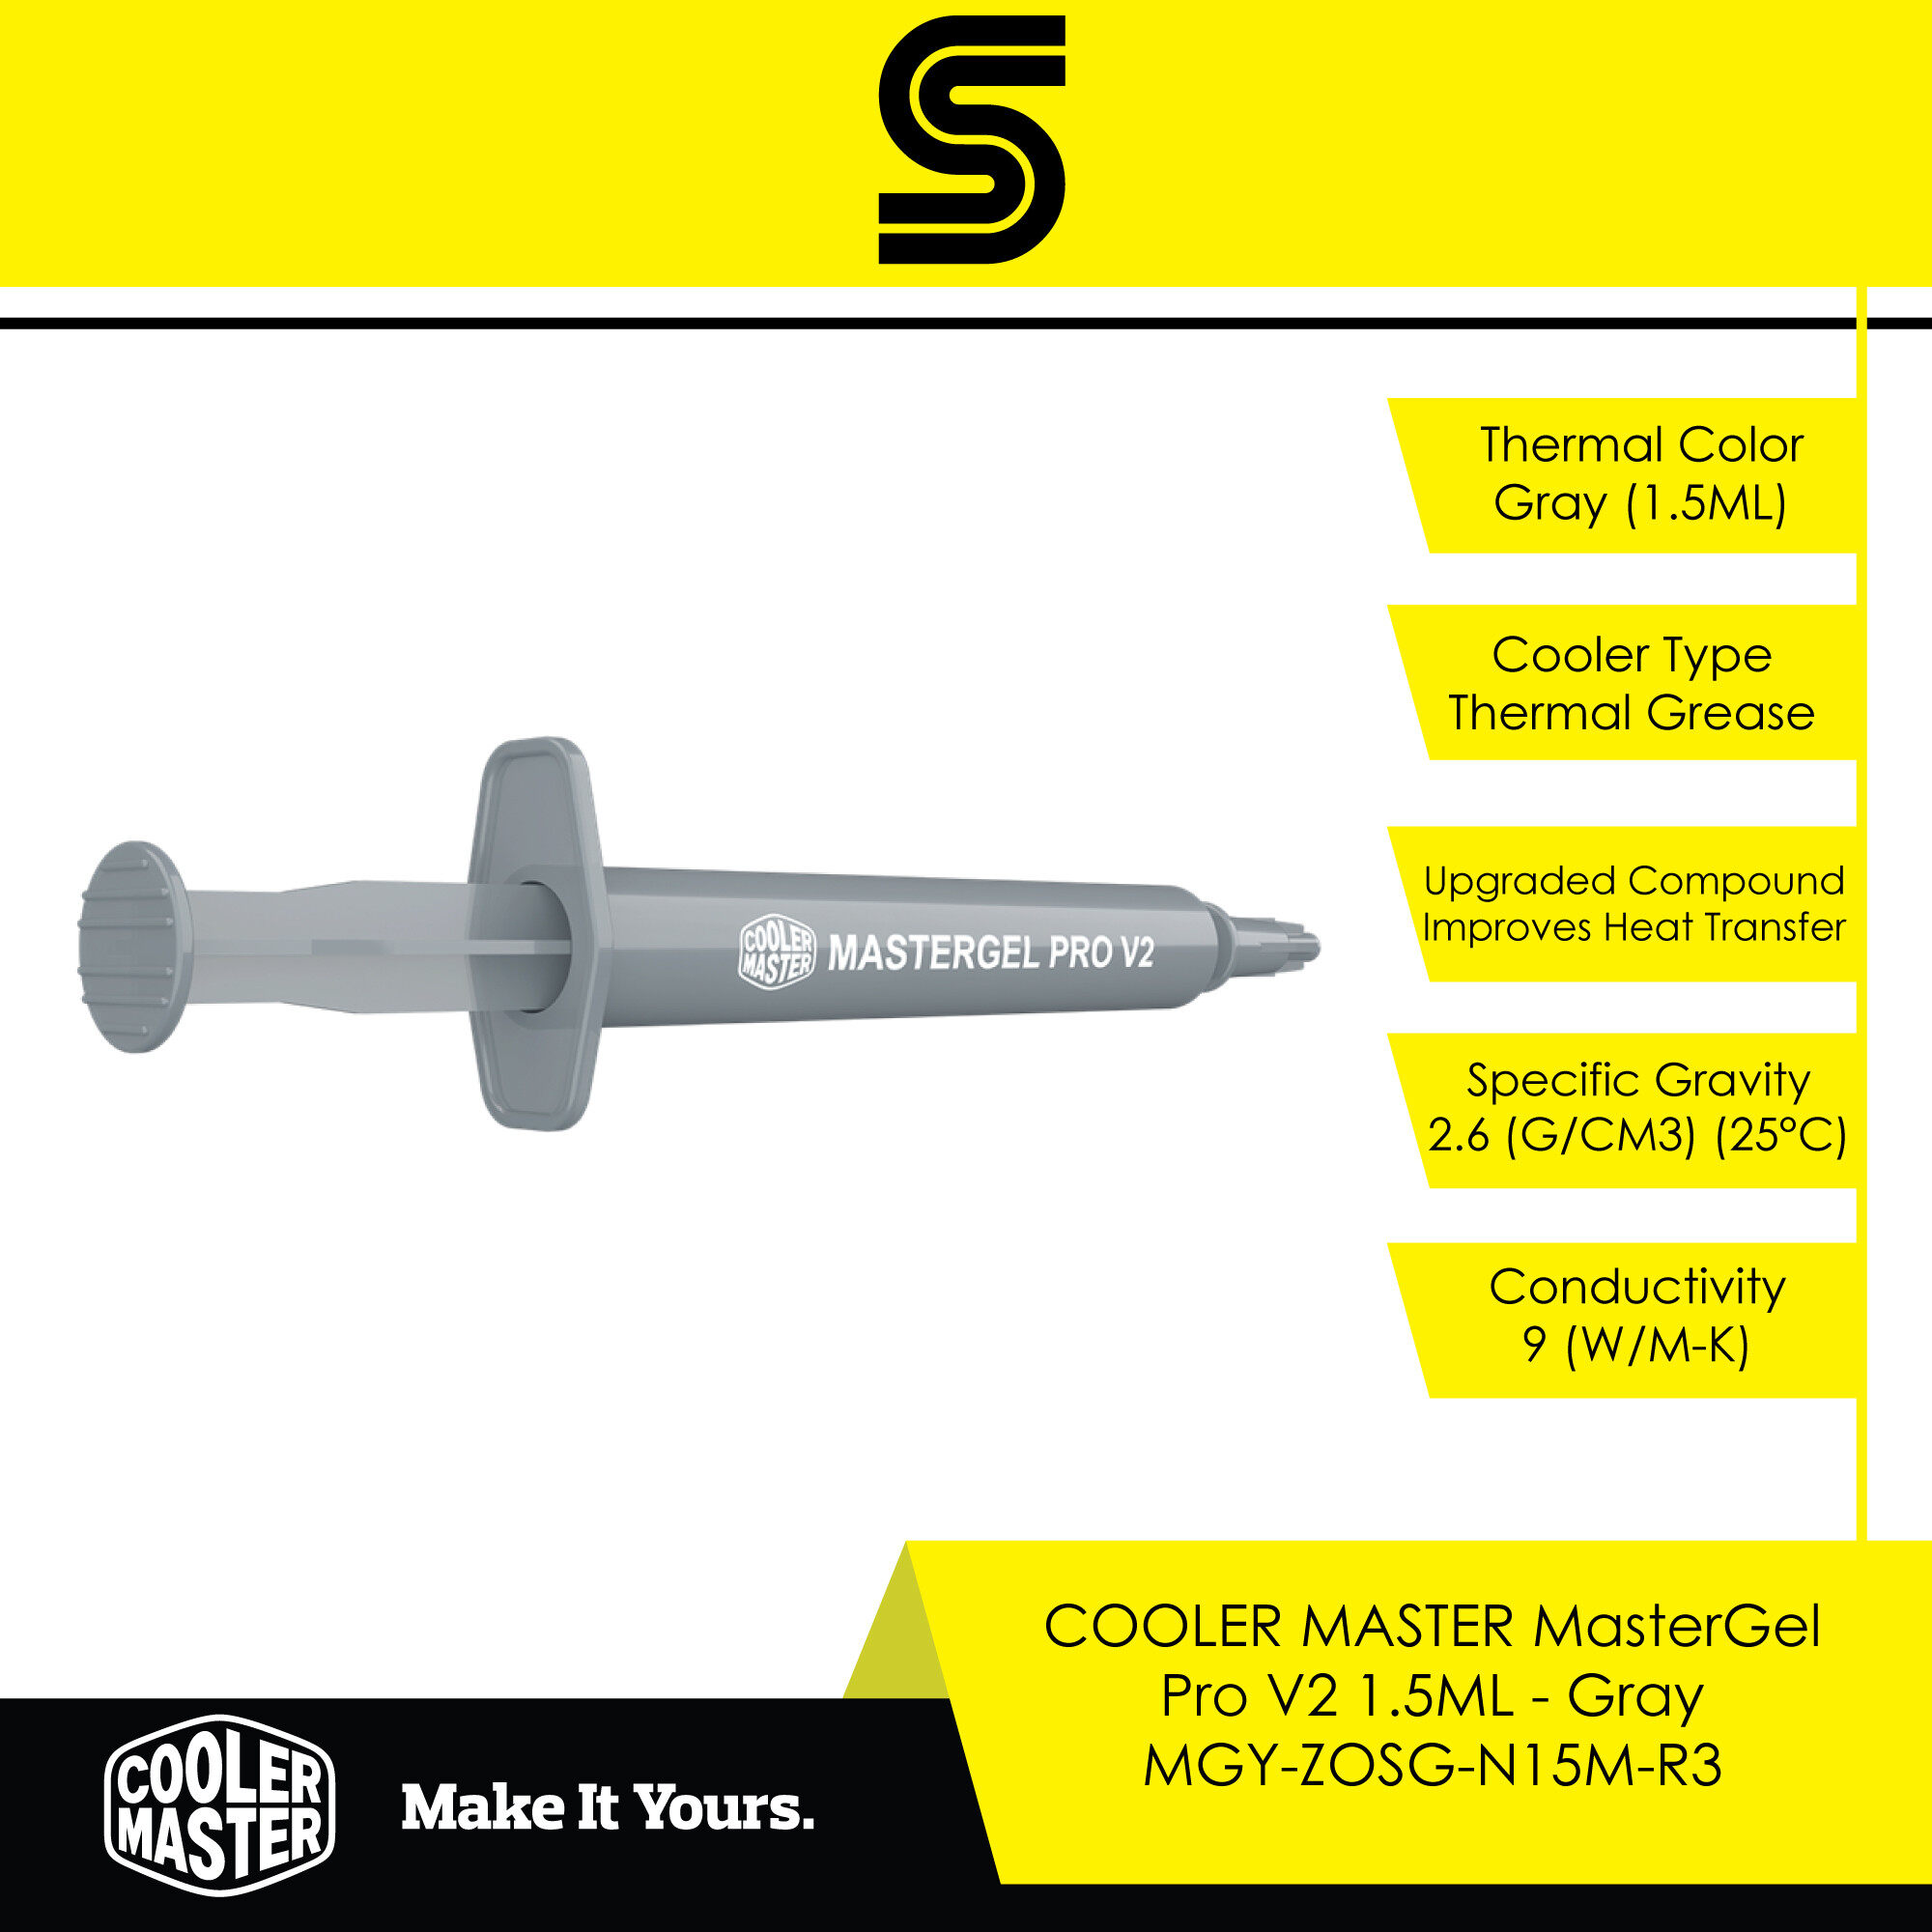 COOLER MASTER Mastergel Pro V2 1.5ML Thermal Paste - Gray - MGY-ZOSG-N15M-R3